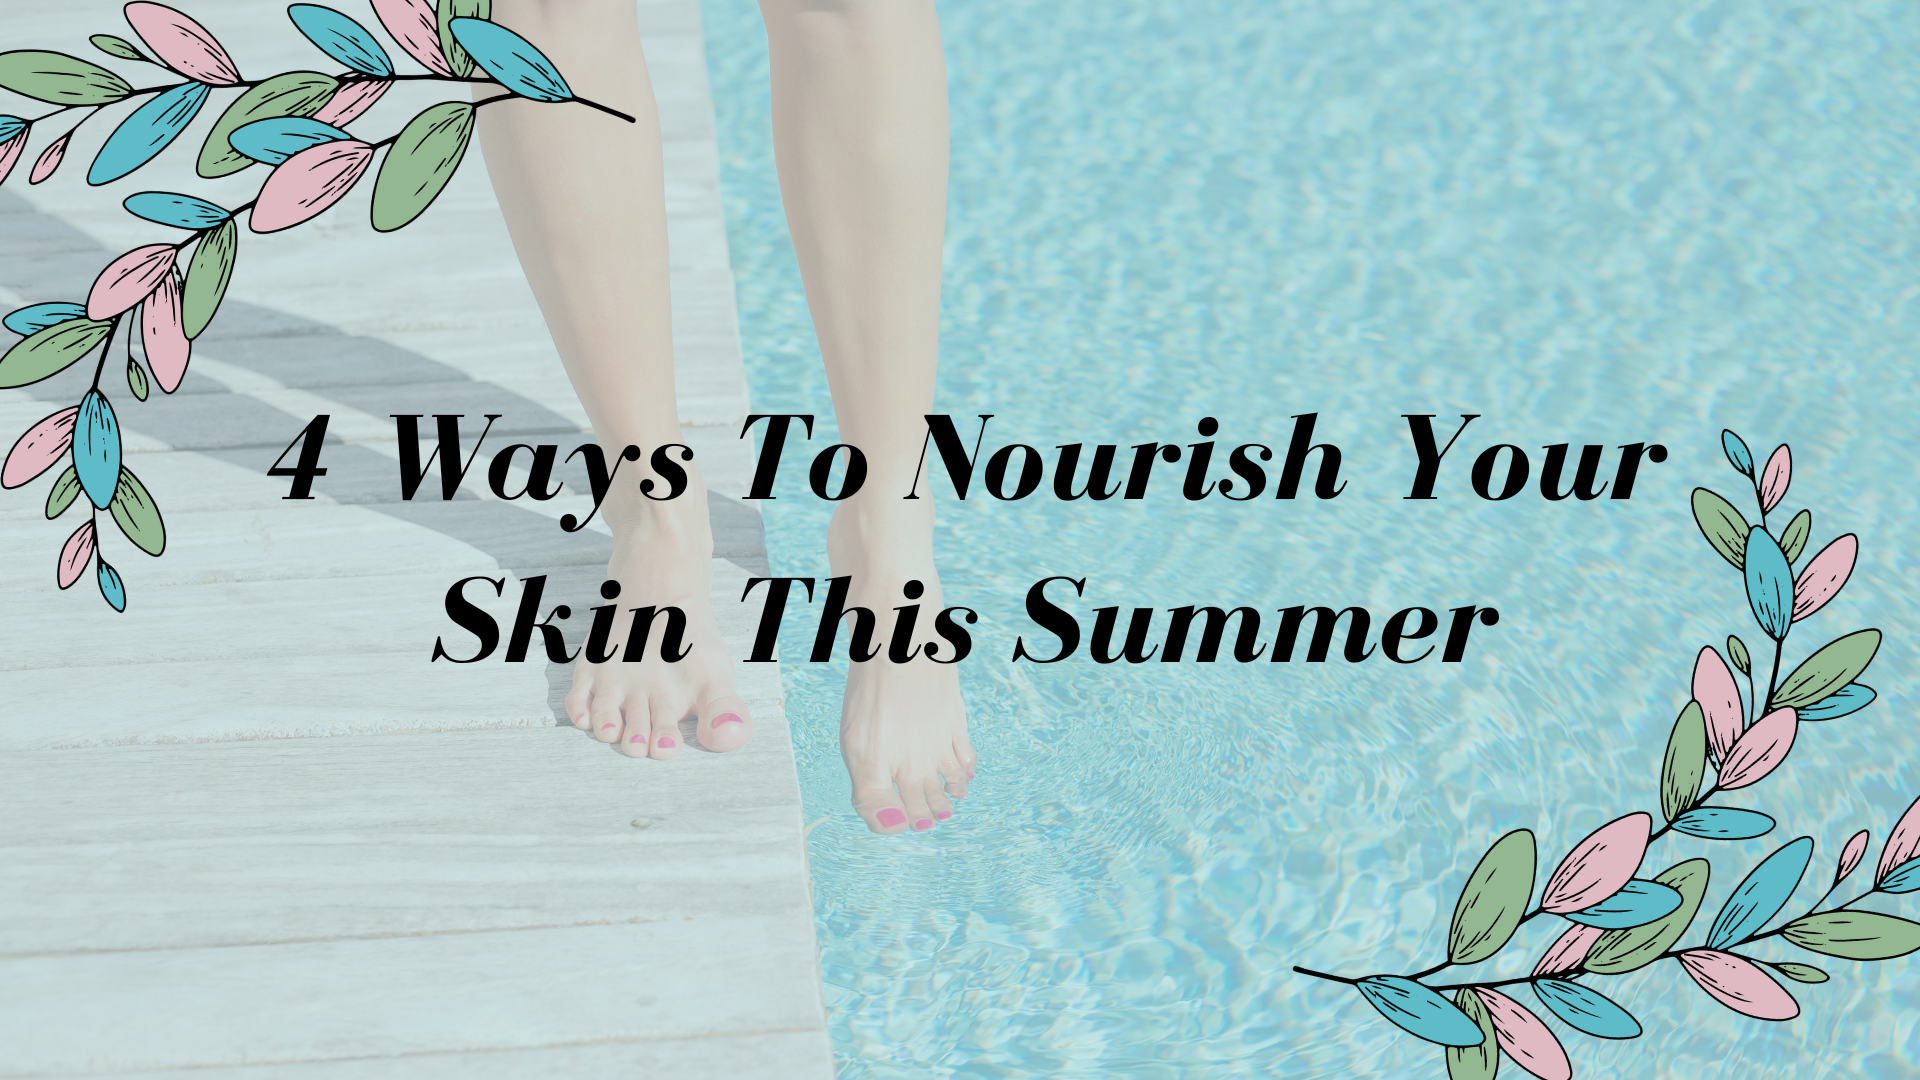 4 Ways To Nourish Your Skin This Summer